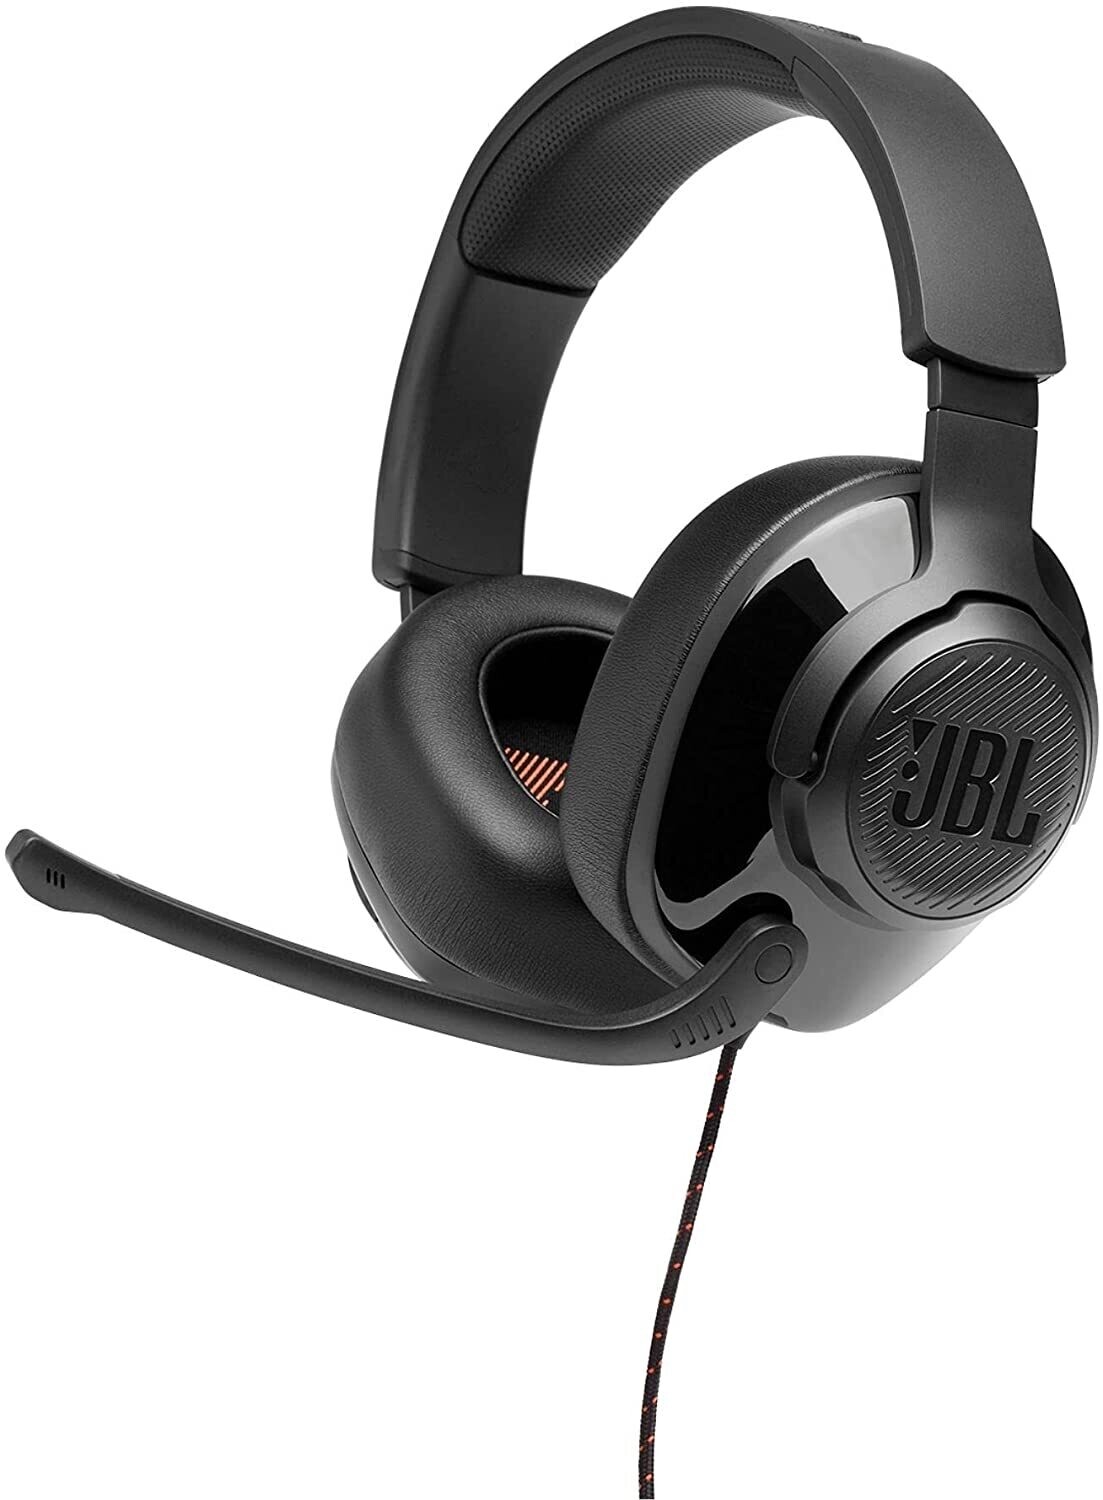 JBL Quantum 200 - Wired Over-Ear Gaming Headphones - Black,